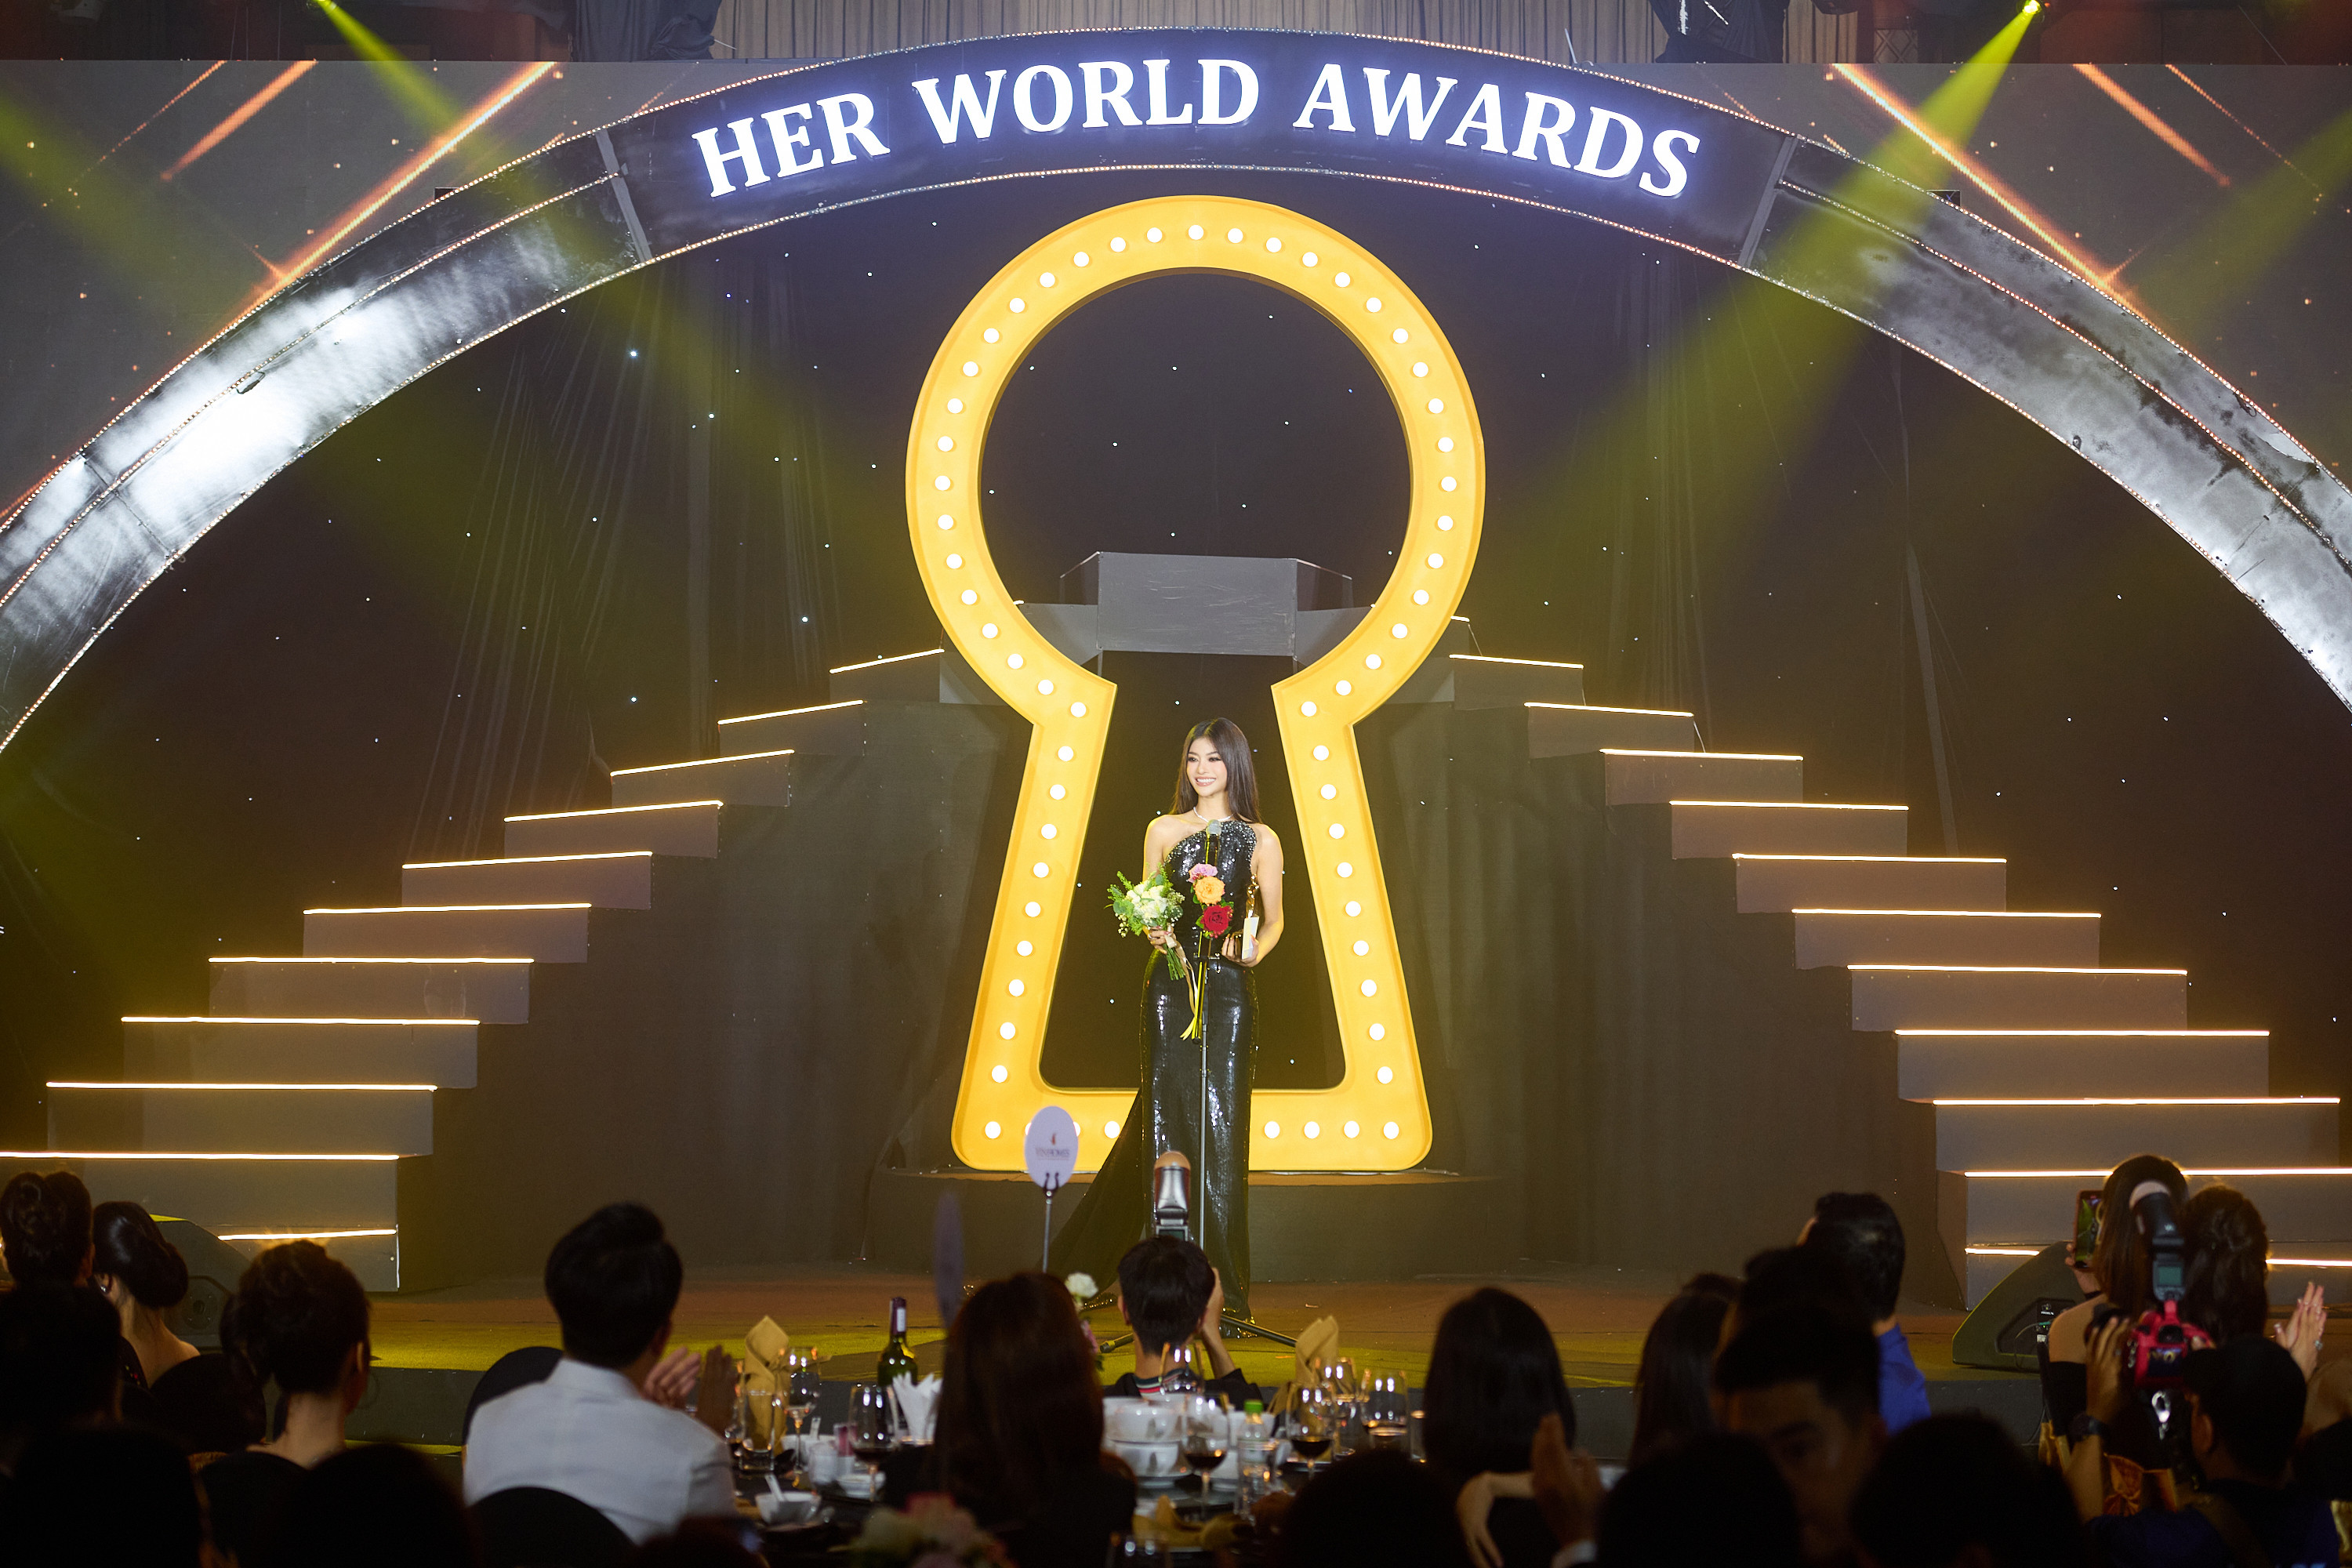 View - Lona Kiều Loan nhận giải ca sĩ của năm tại Her World Awards